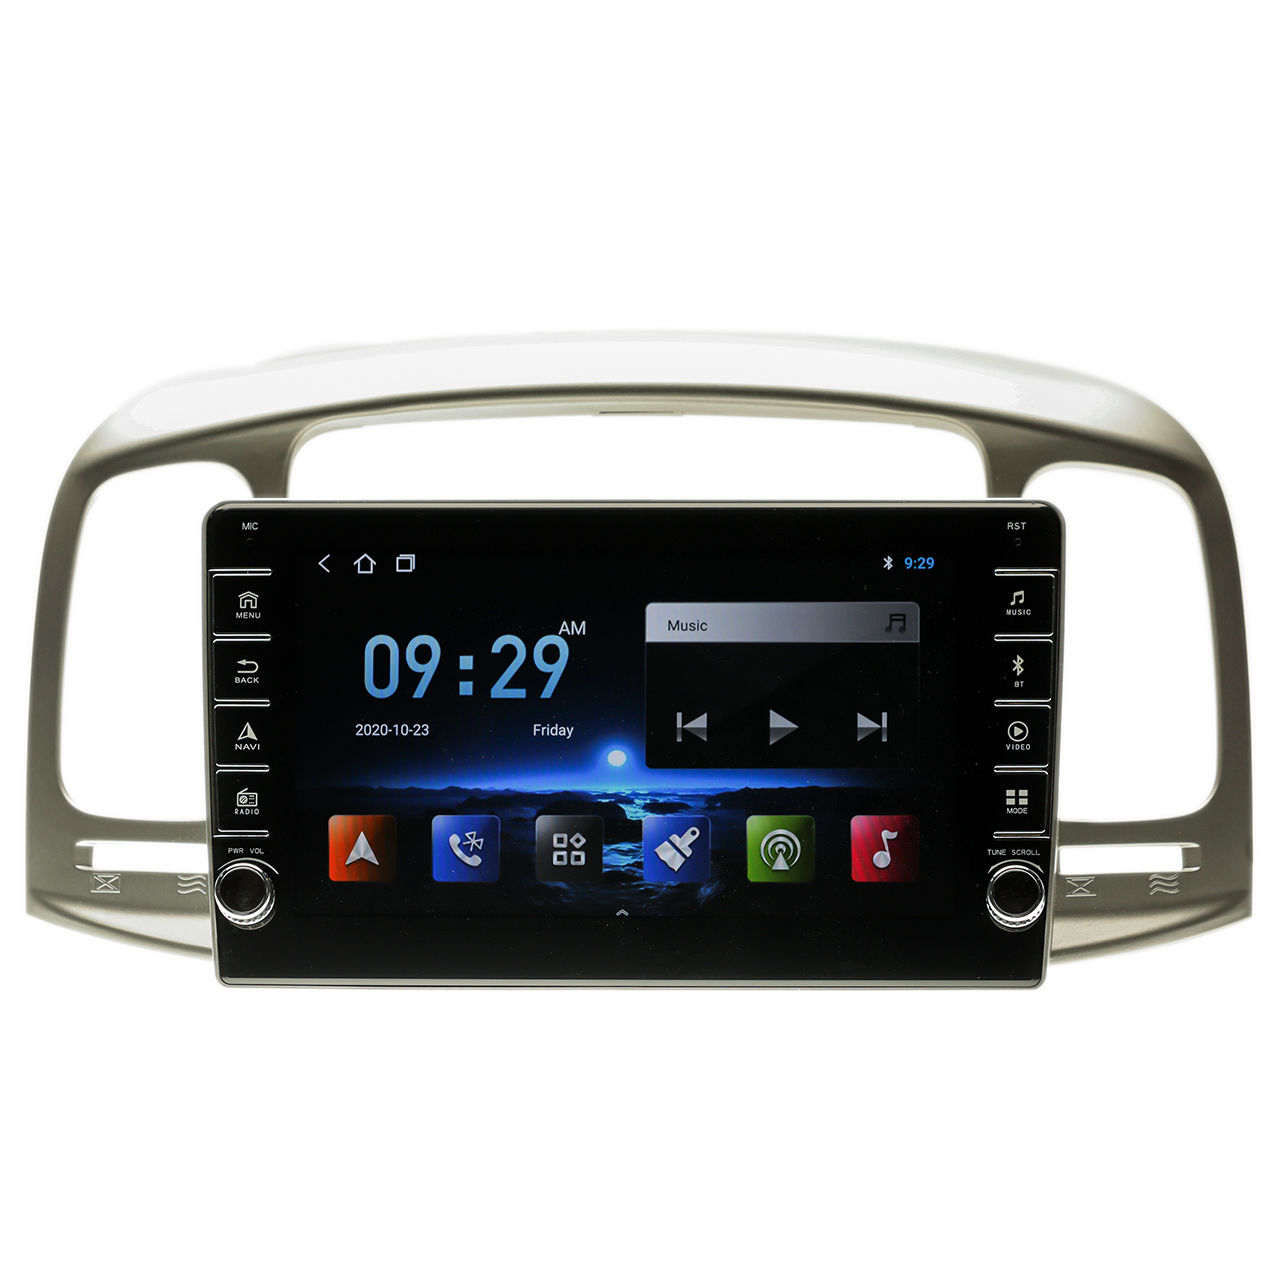 Navigatie AUTONAV ECO Android GPS Dedicata Hyundai Accent 2005-2011, Model PRO Memorie 16GB Stocare, 1GB DDR3 RAM, Butoane Laterale Si Regulator Volum, Display 8